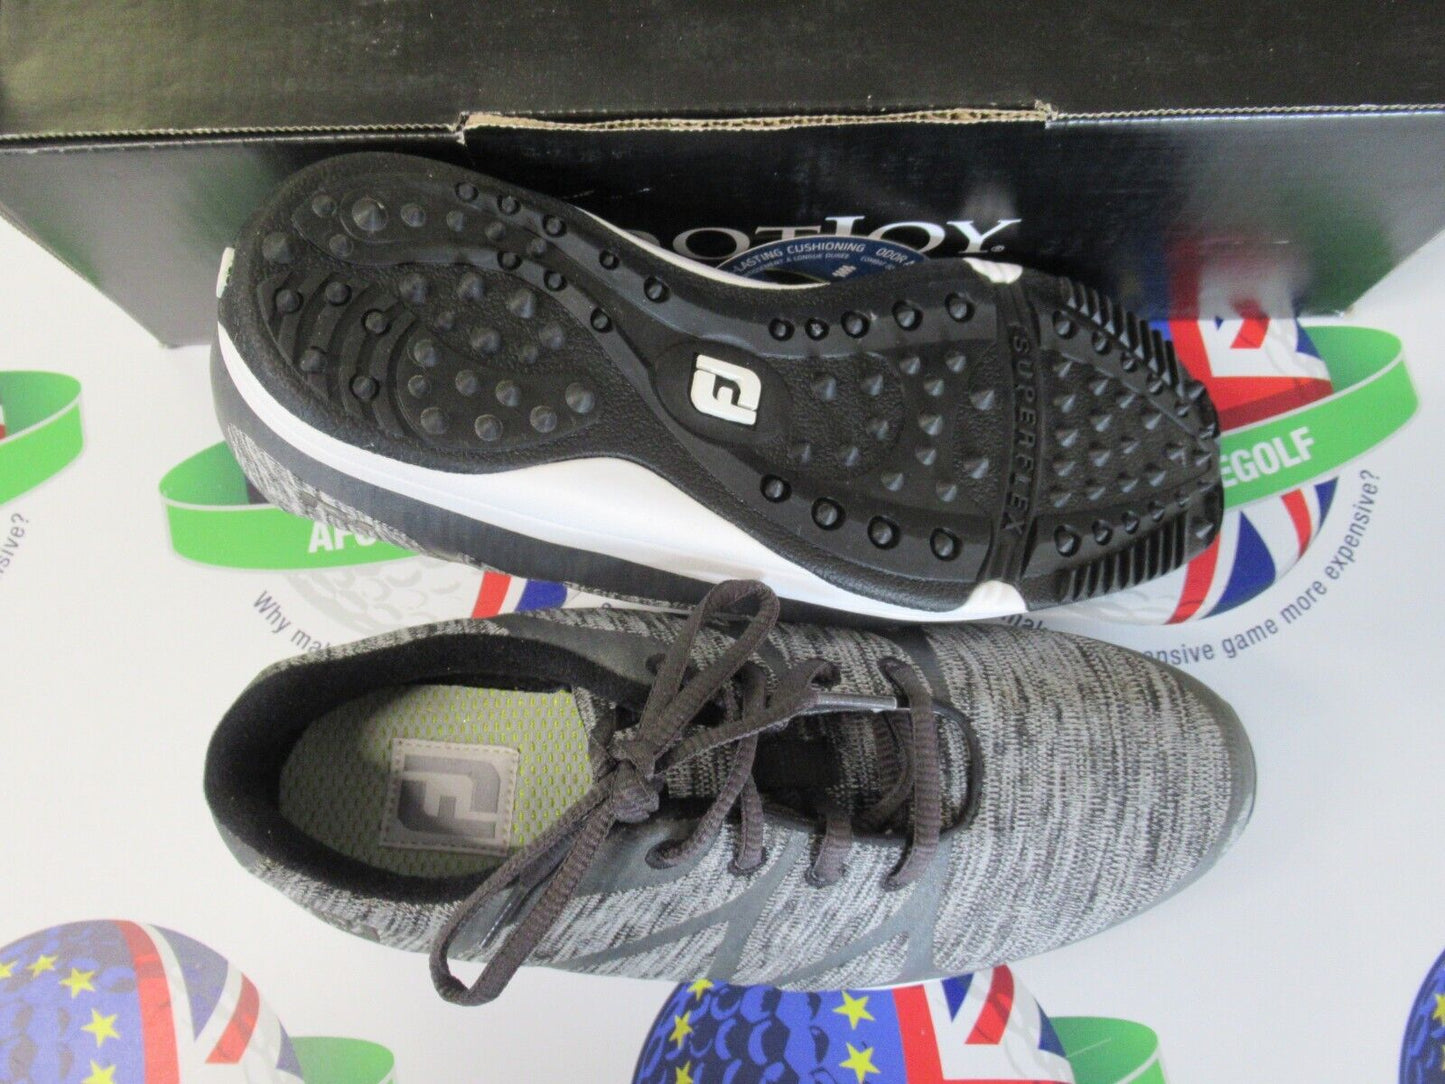 footjoy leisure ladies golf shoes charcoal/grey 92904k uk size 4 w